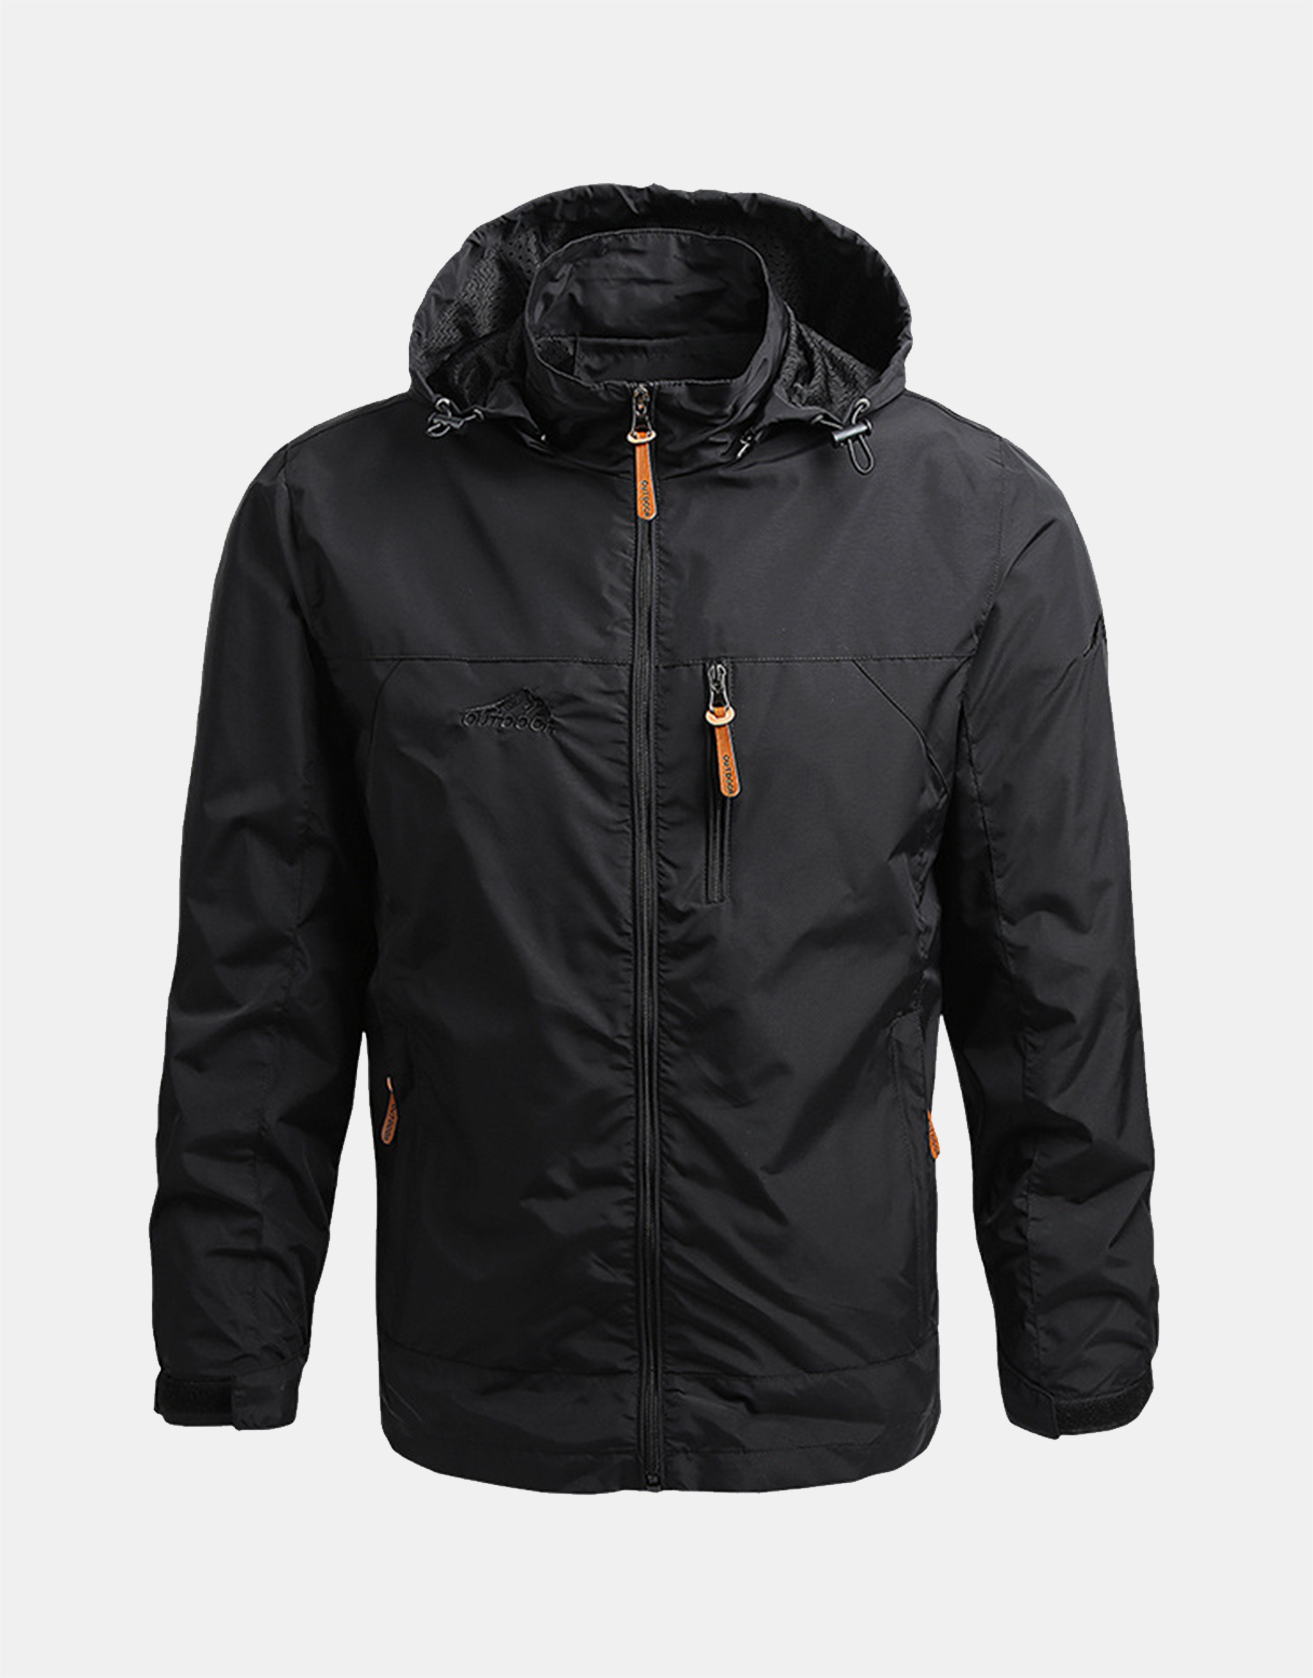 Outdoor Mountaineering Jacket, Light And Warm Jacket / TECHWEAR CLUB / Techwear